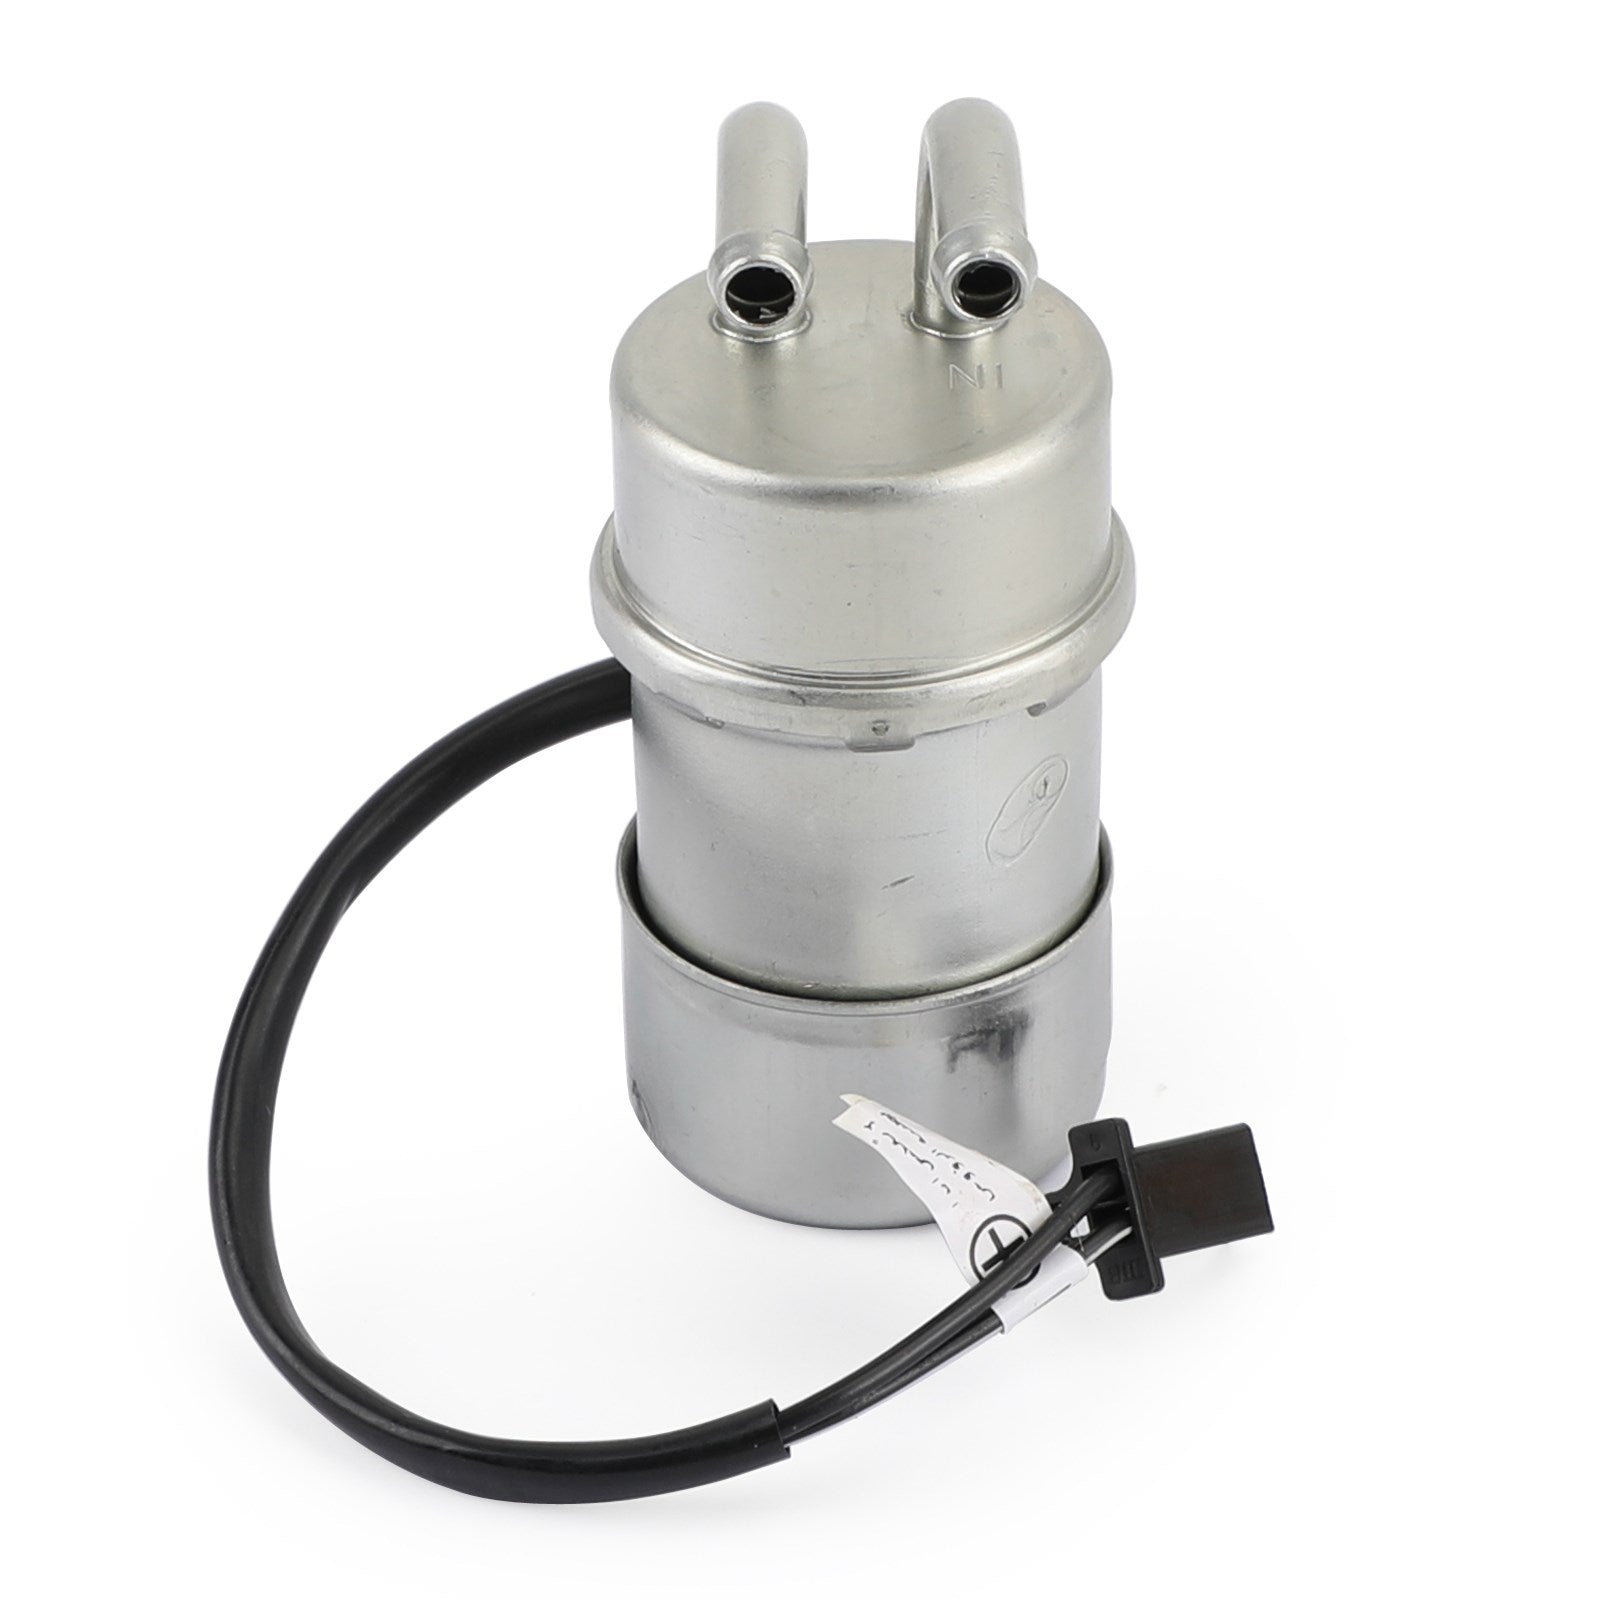 Pompe à essence compatible avec Suzuki Intruder 700 1400 VS1400 VS700 1985-2009 - Numéro de pièce 15100-38A00